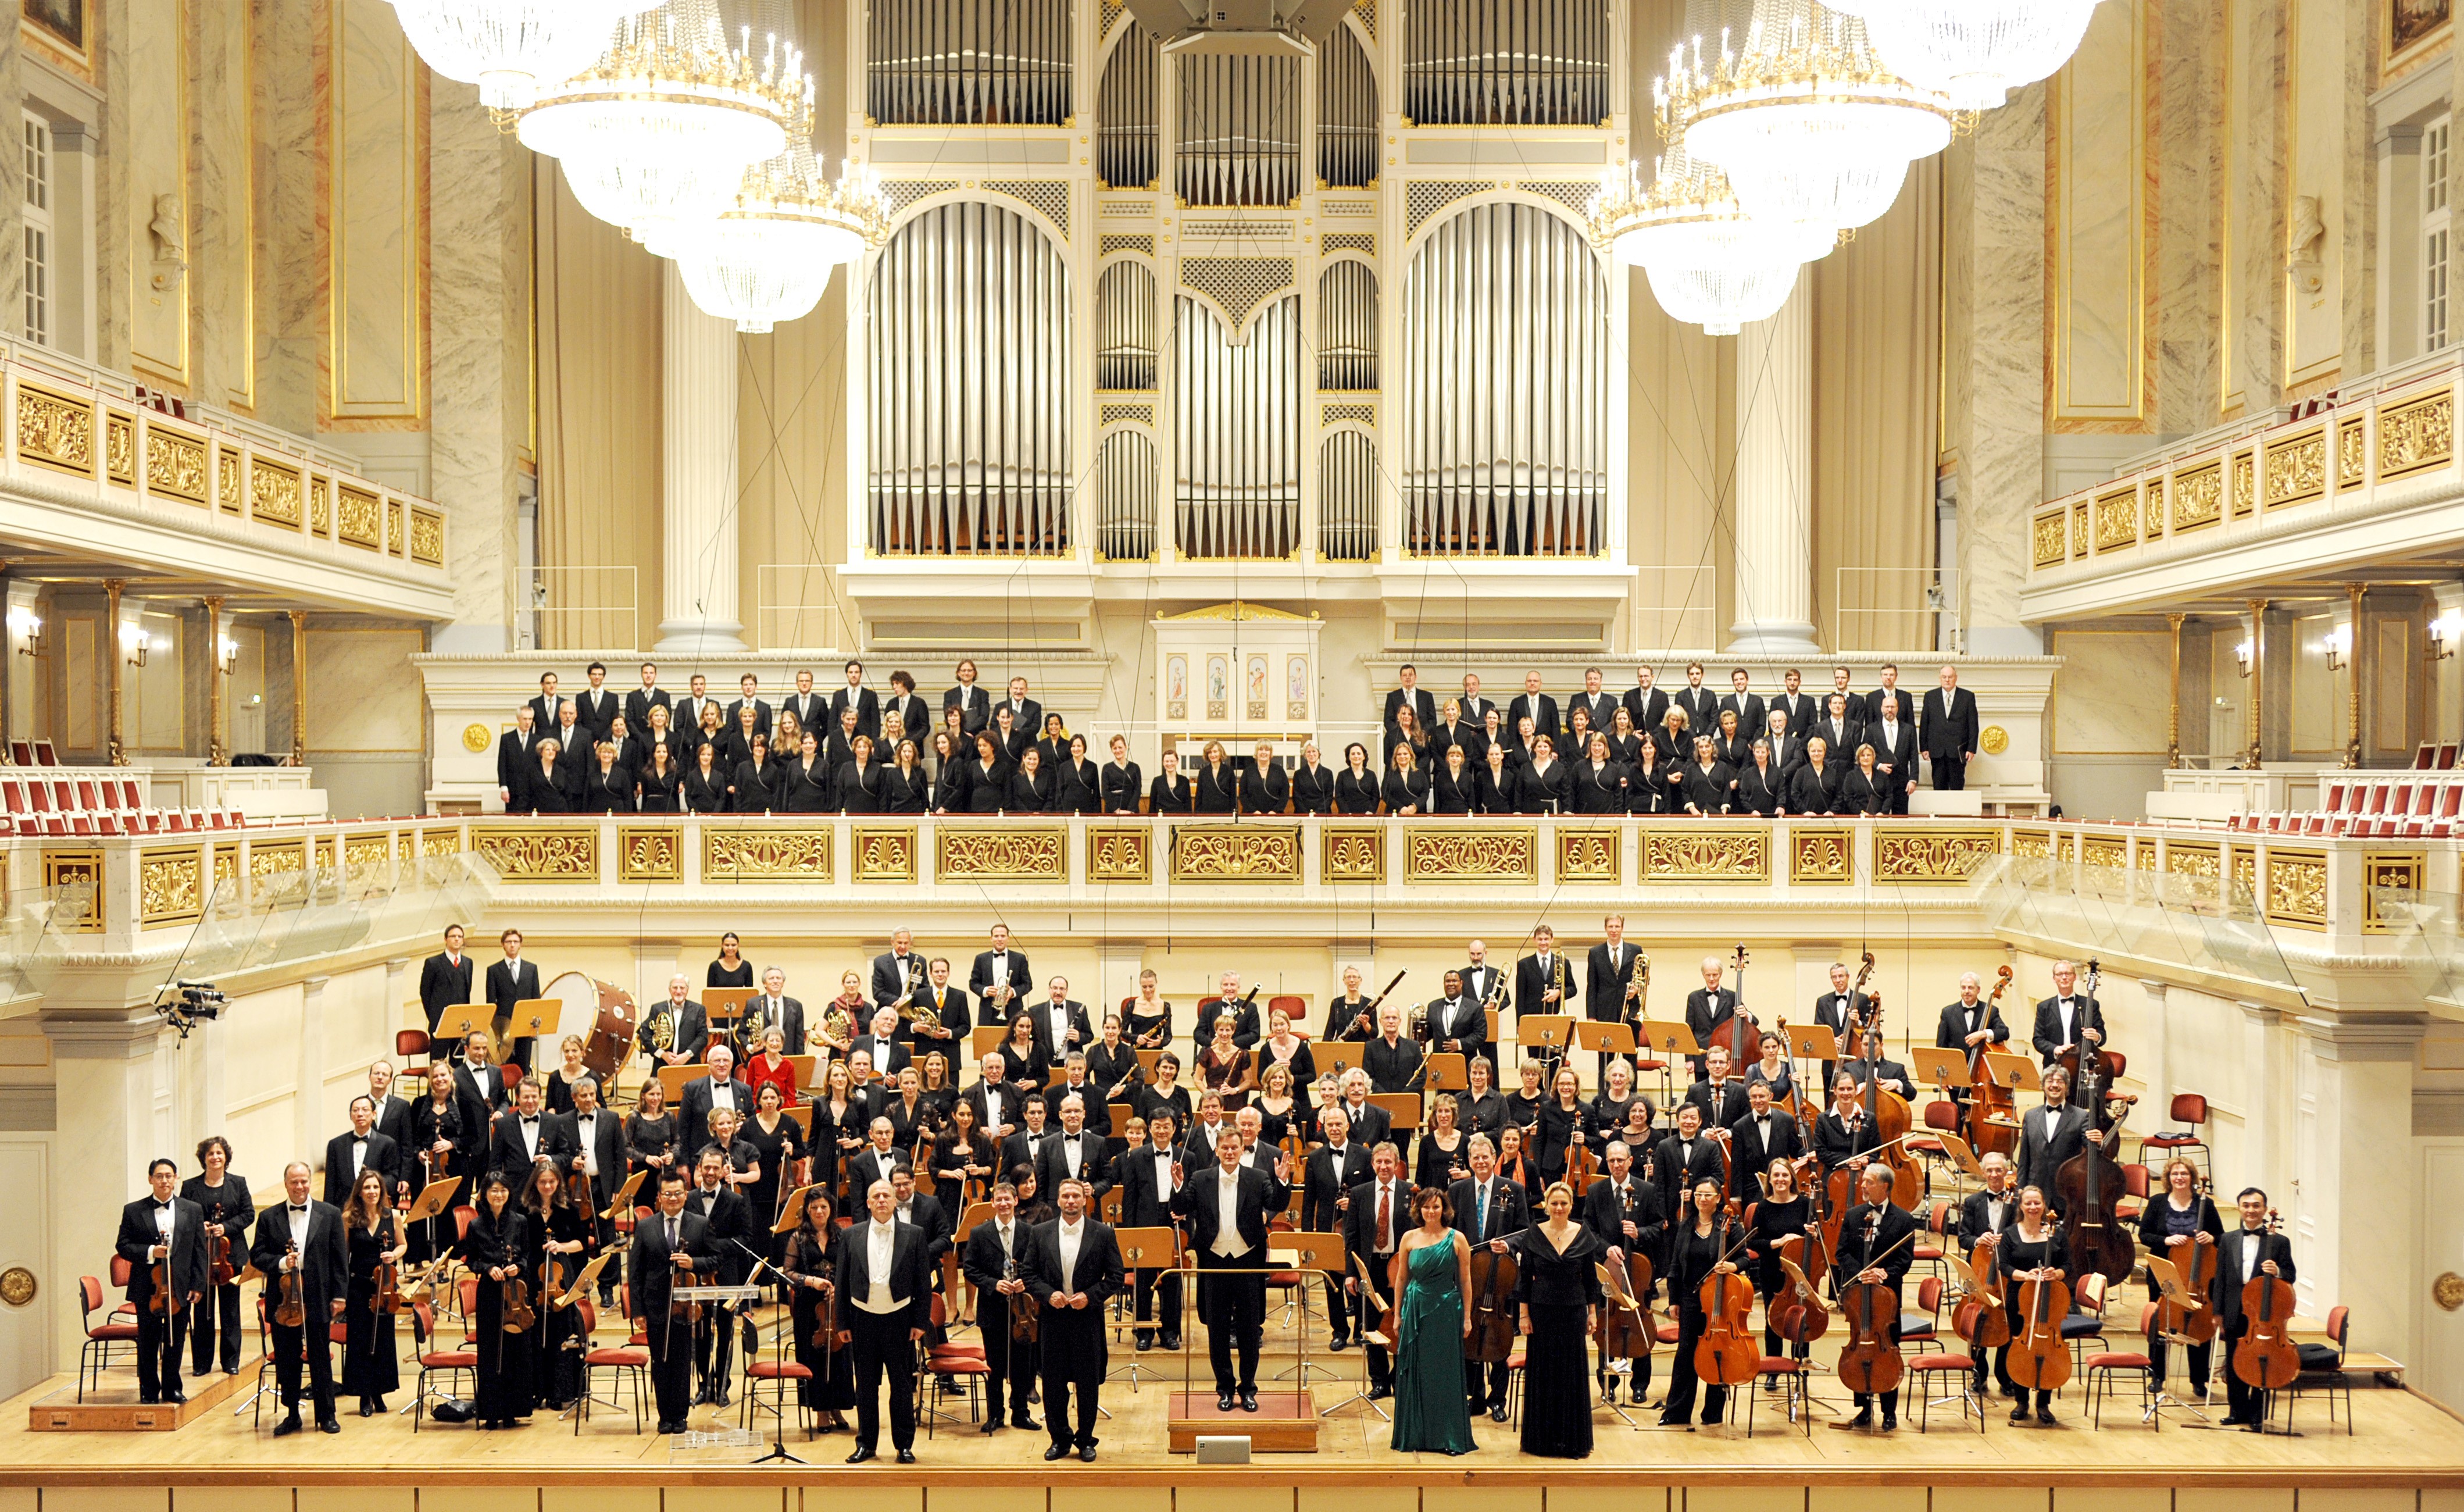 Berlin orchestra